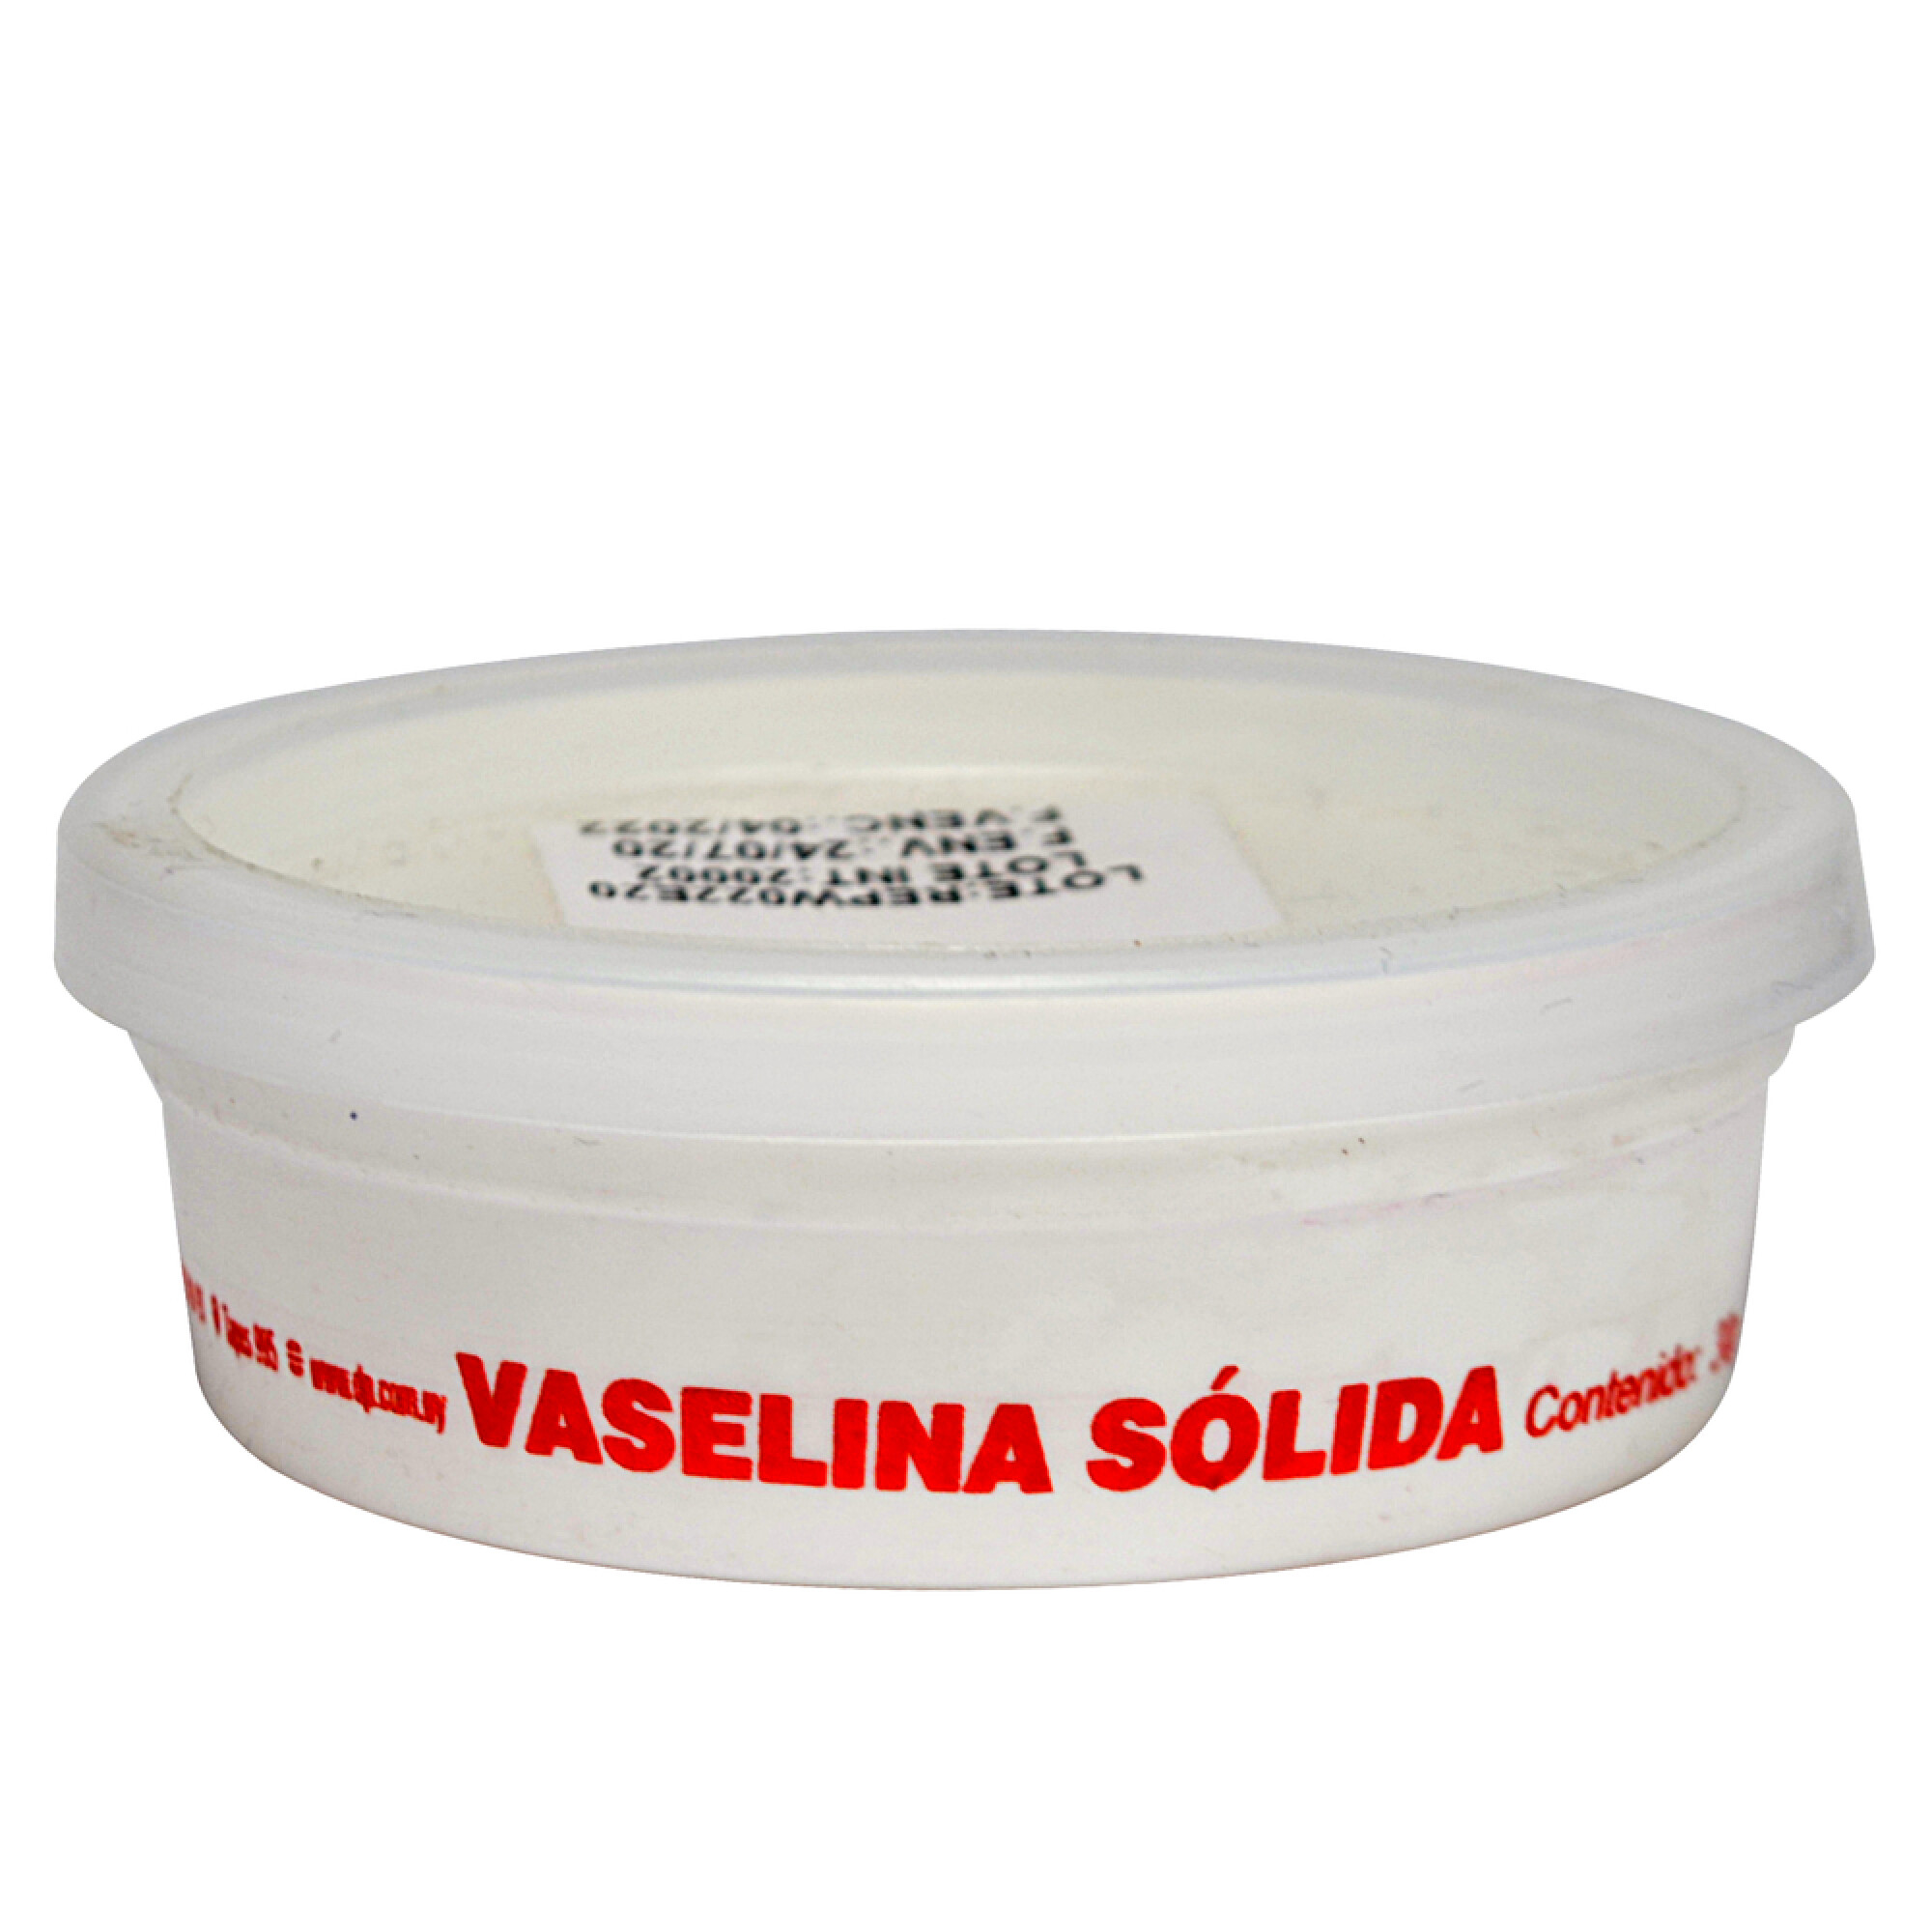 Vaselina Sólida - 30 g — Droguería Paysandú